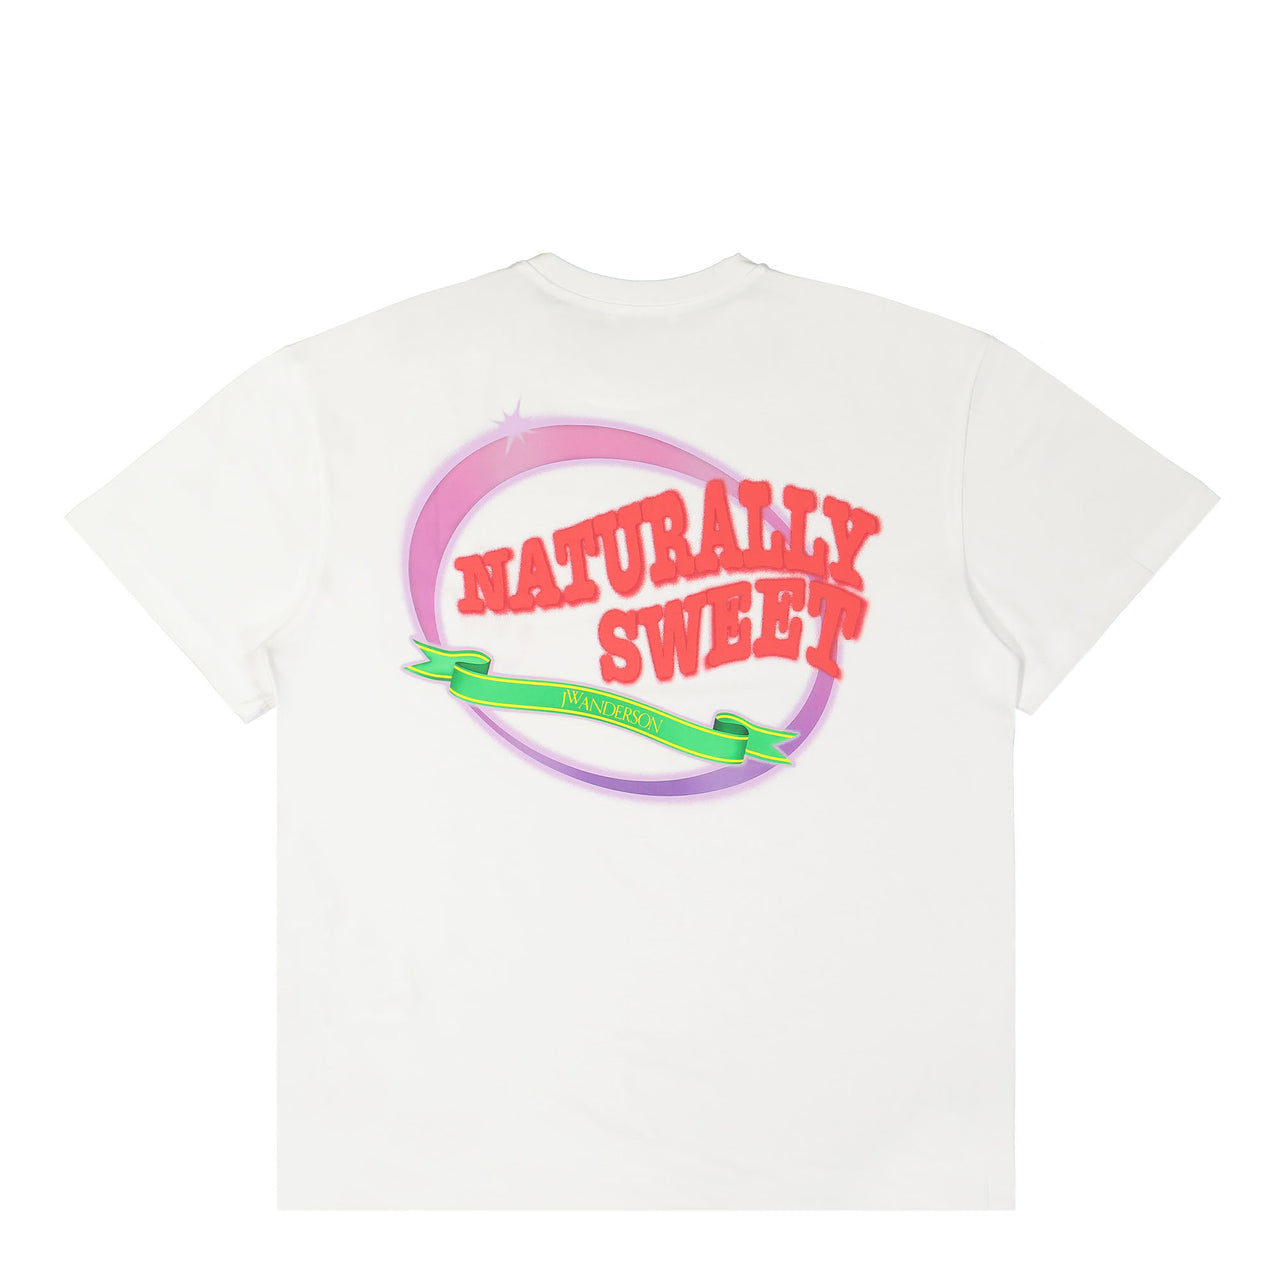 Naturally Sweet Anchor T-Shirt